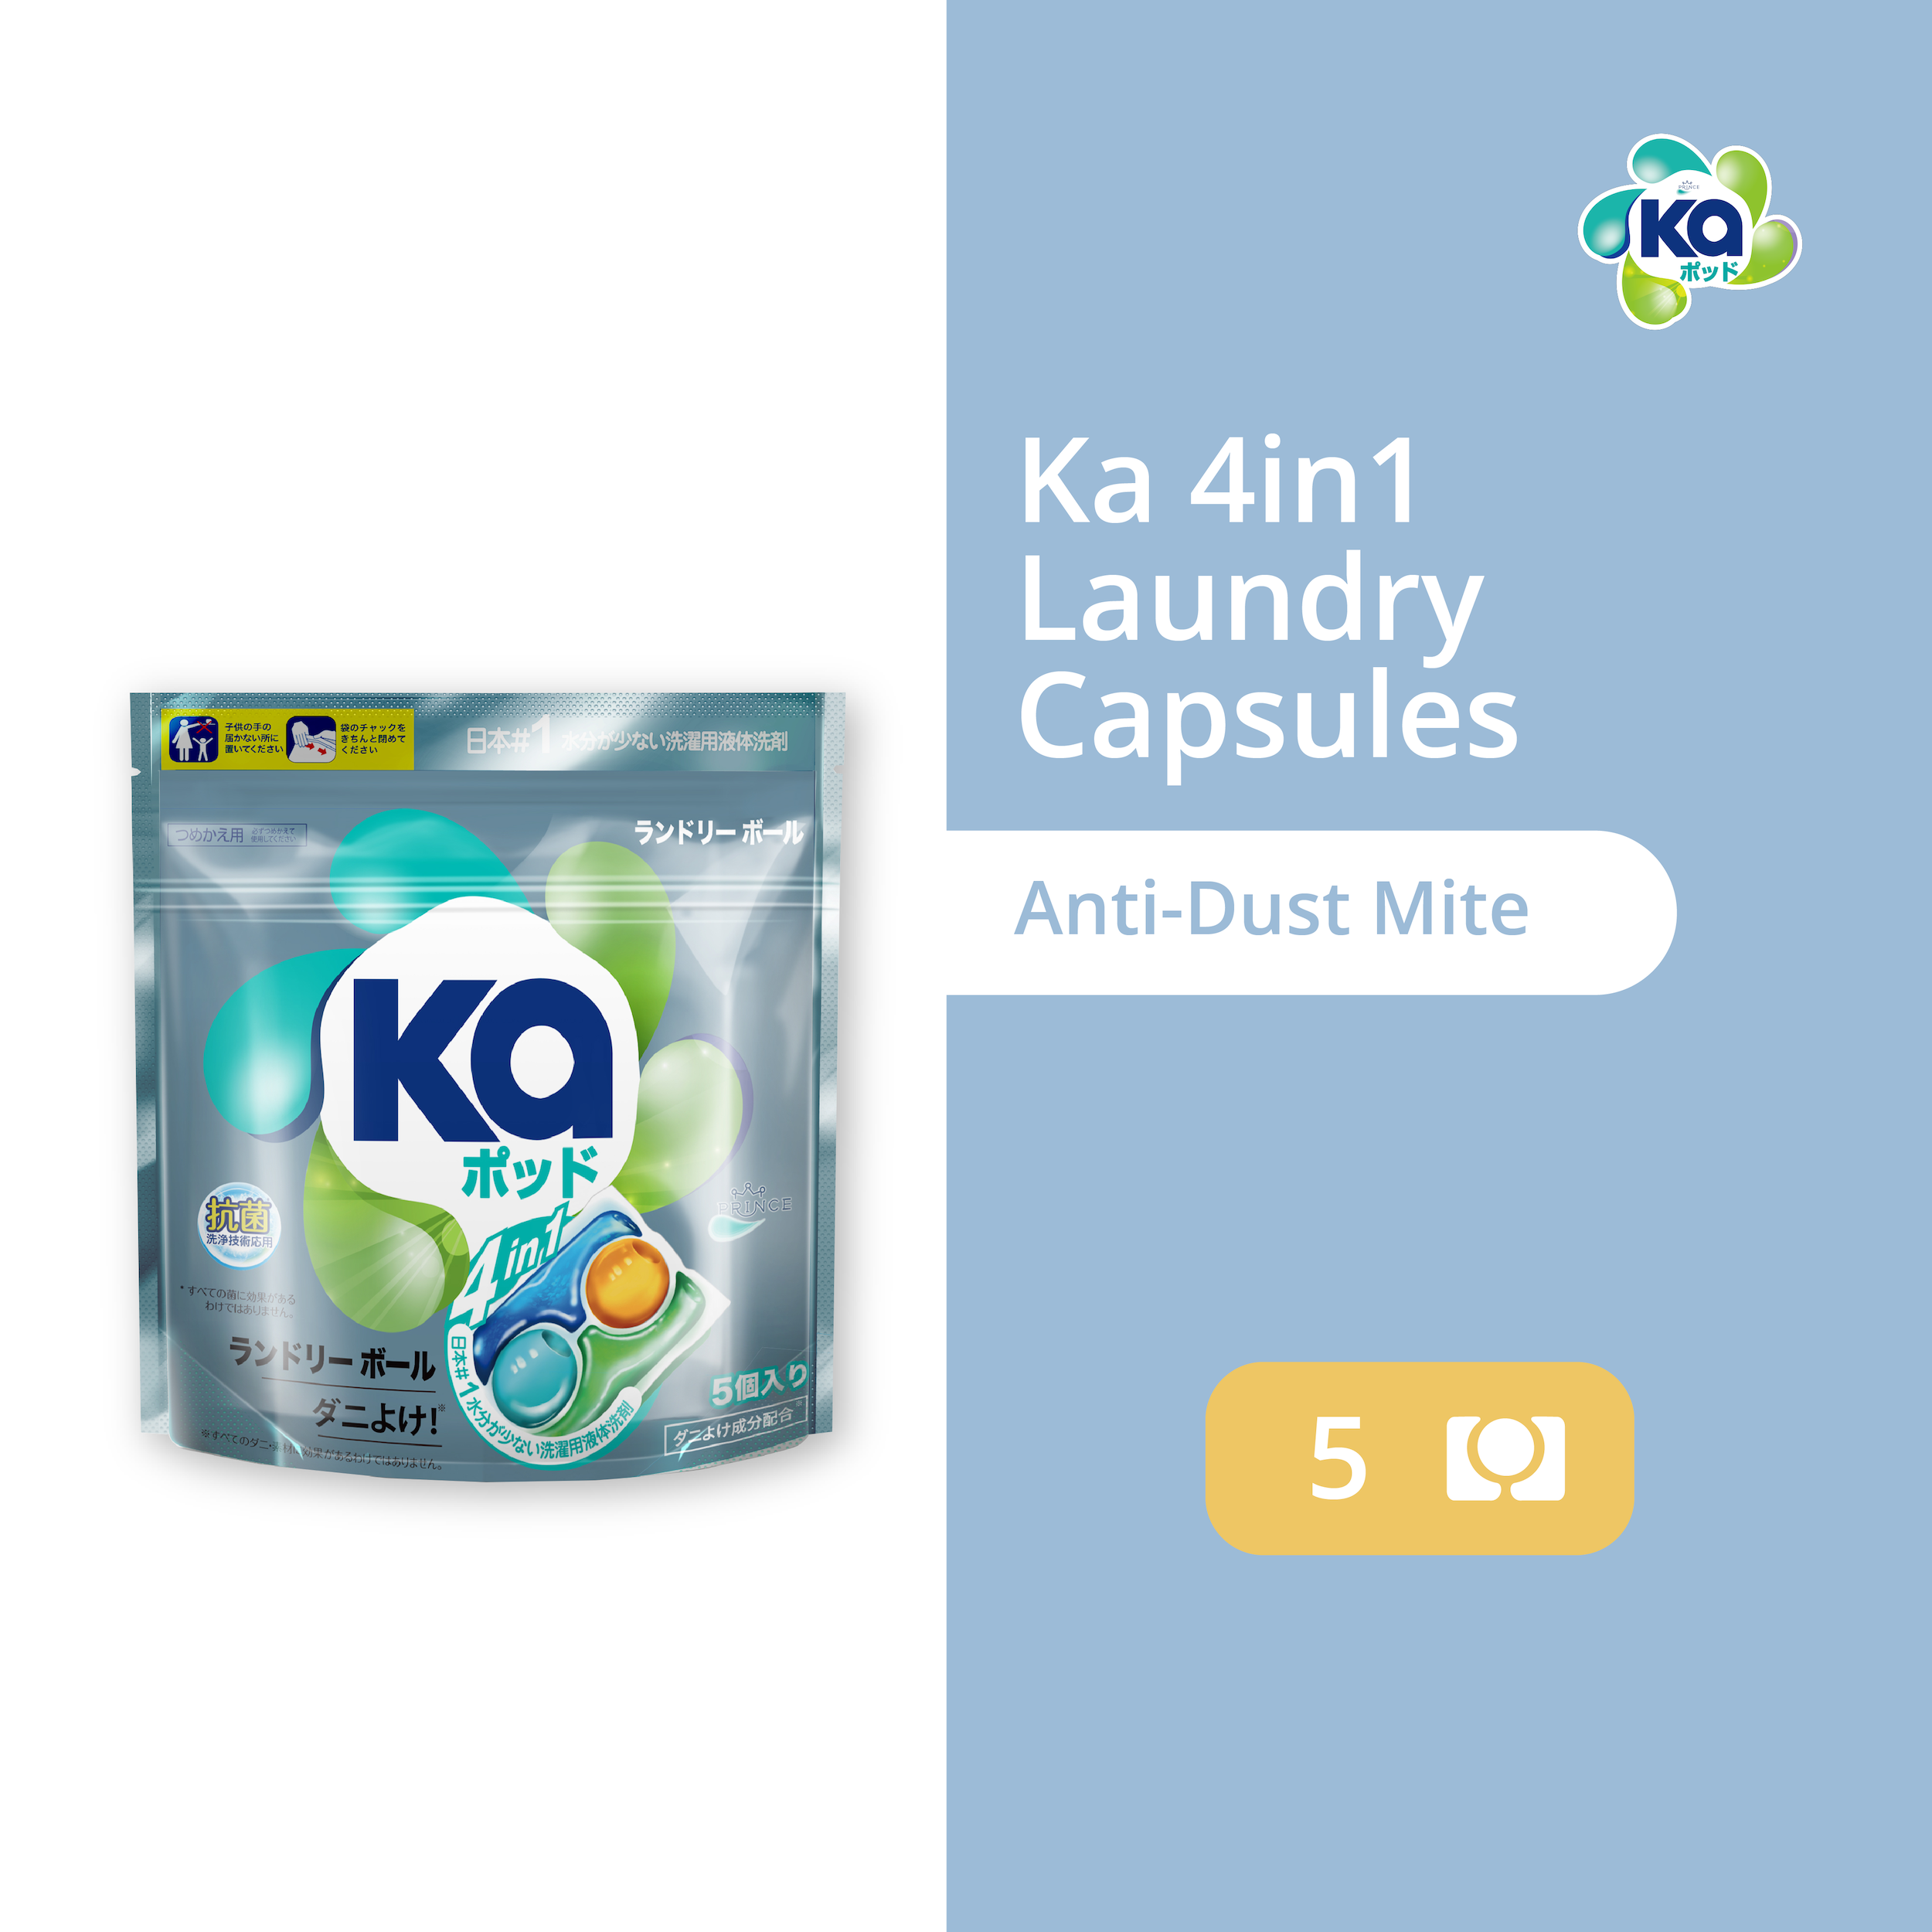 Ka 4in1 Laundry Capsules 5pcs – Anti-Dust Mite